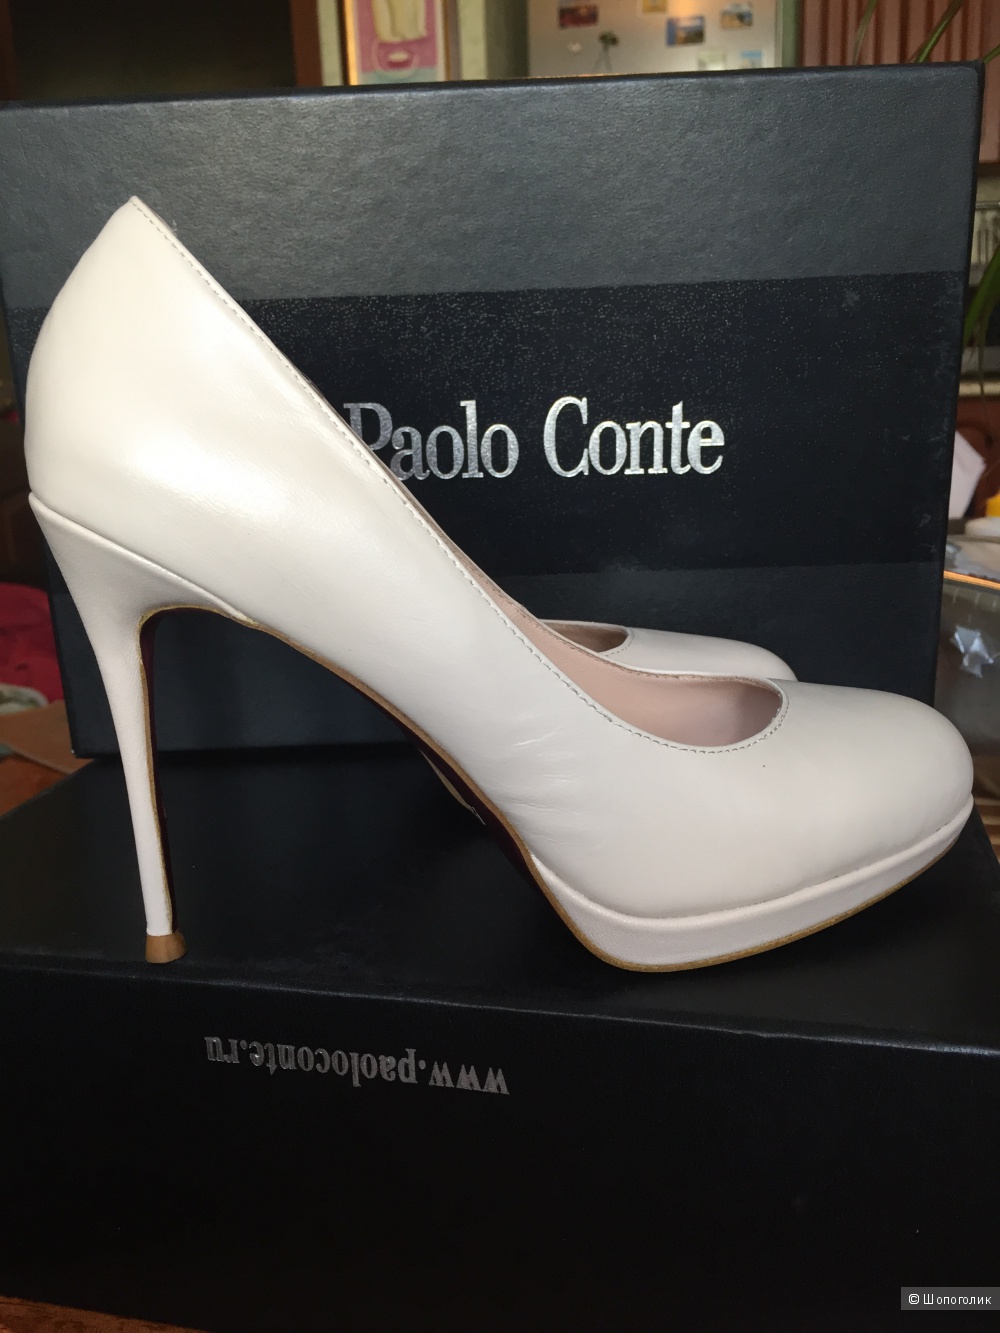 Продам новые туфли  Paolo Conte